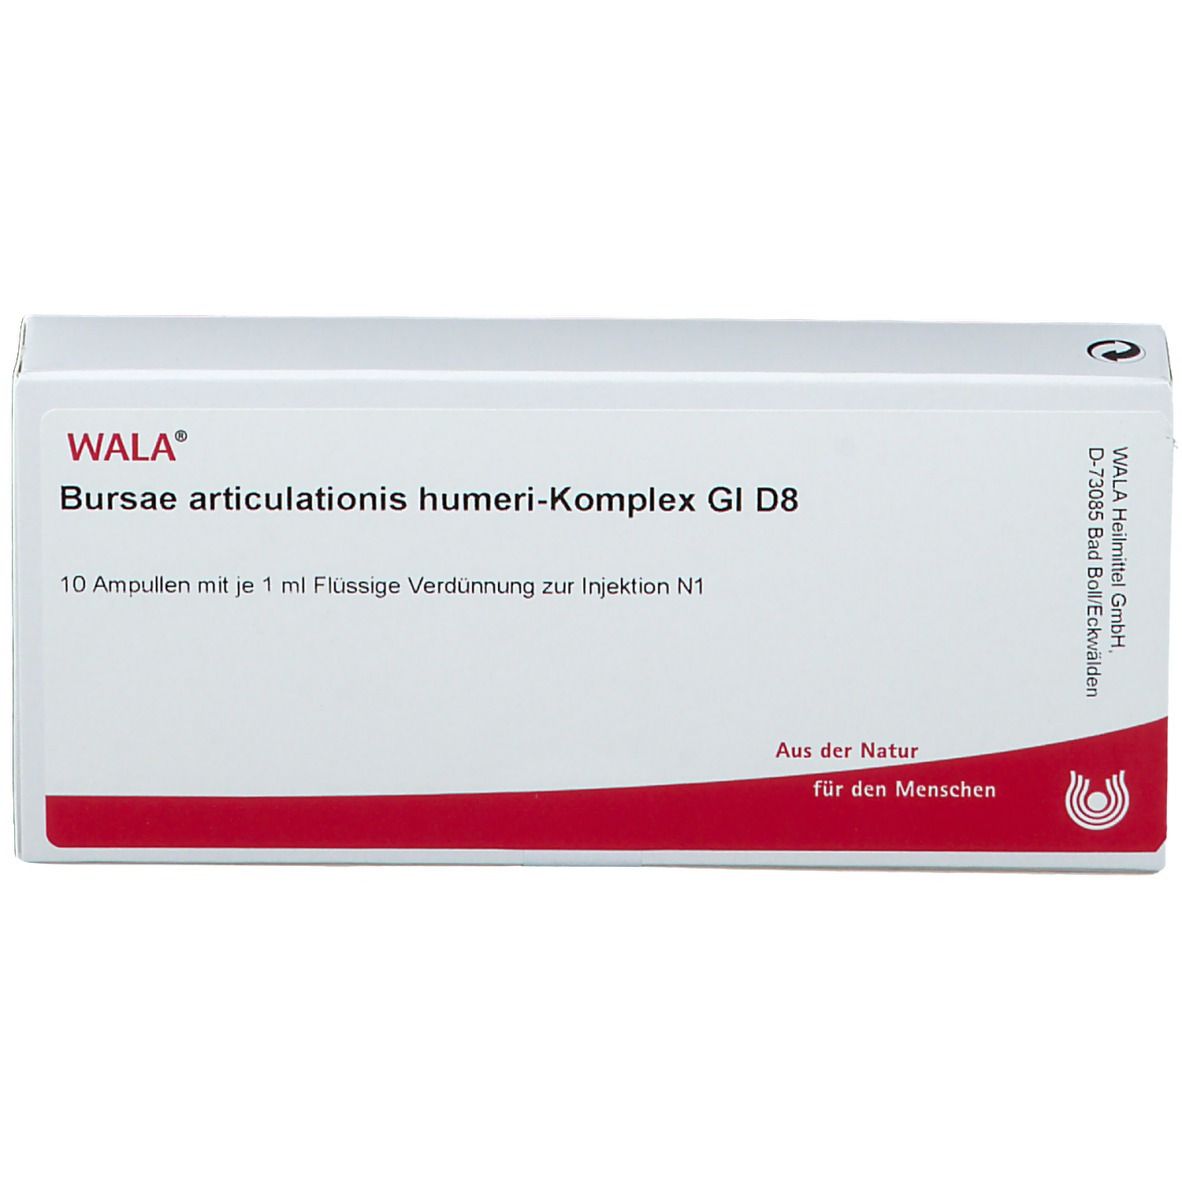 WALA® Bursae articulationis humeri-Komplex Gl D 8